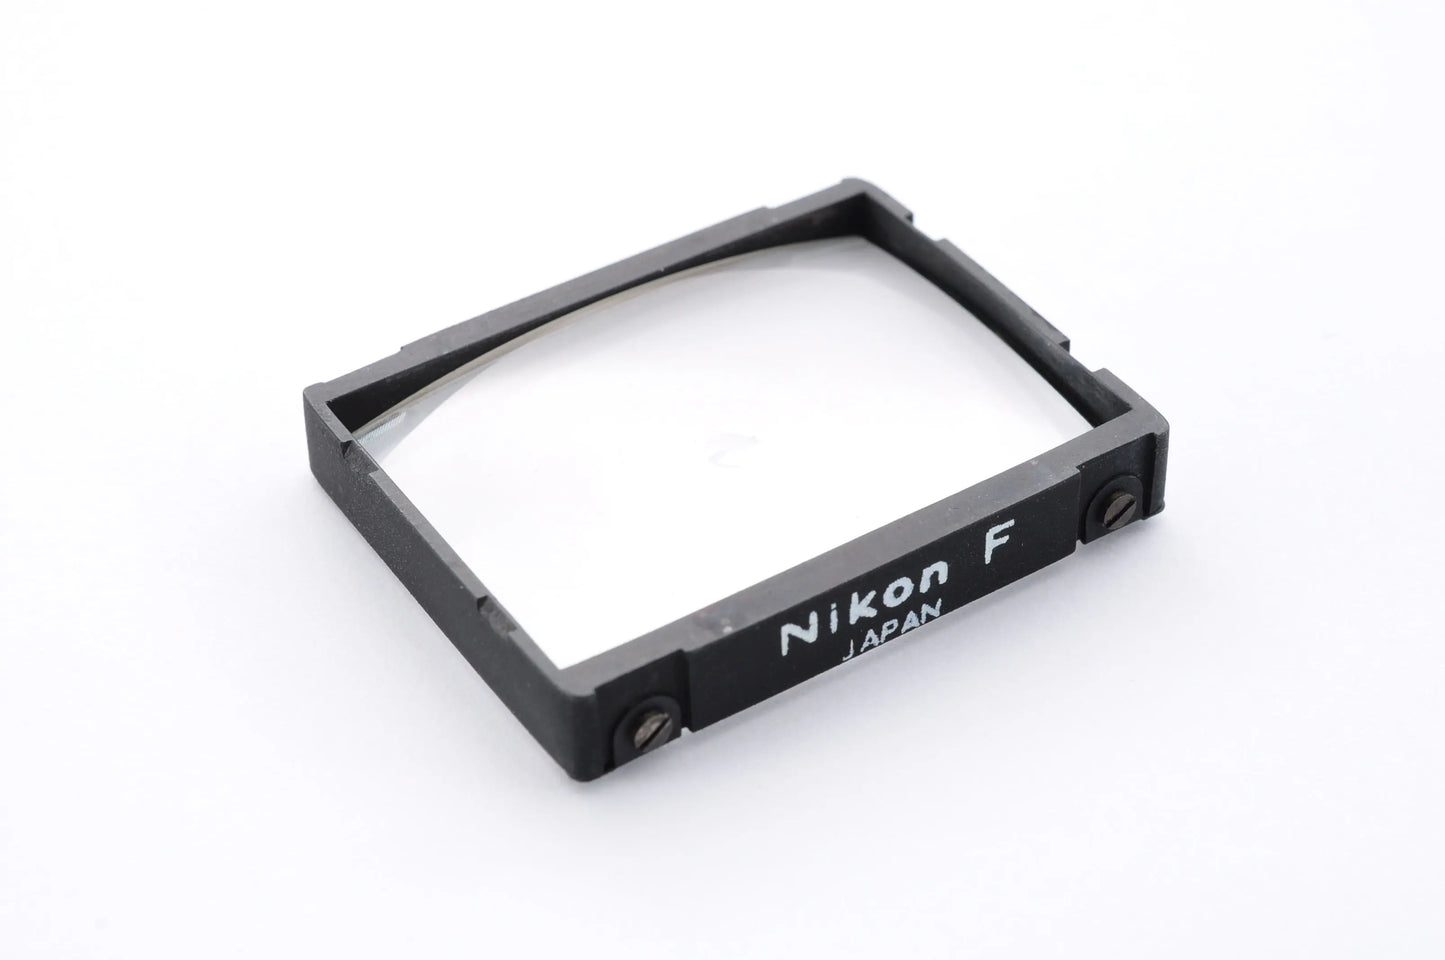 Nikon F Eye Level Silver S/N6409538 Mt Fuji Mark 35mm SLR Film Camera From Japan